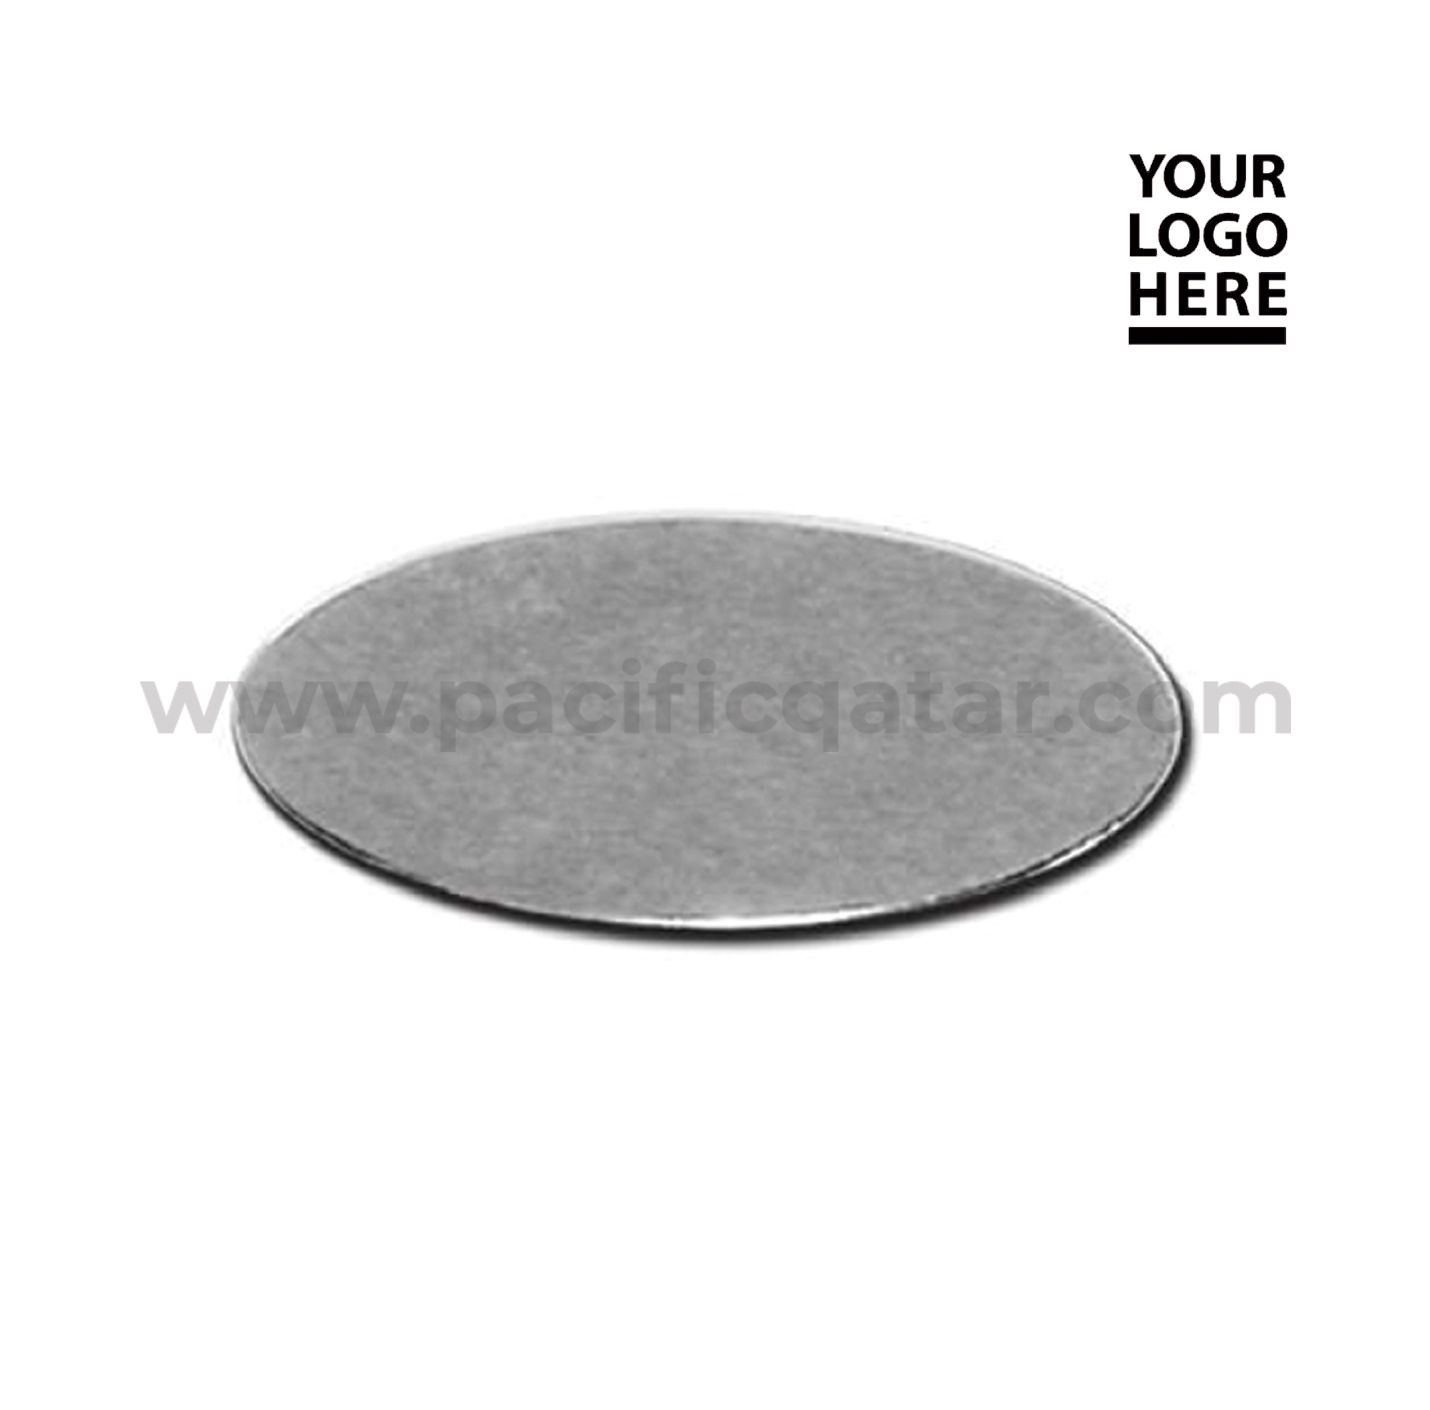 Oval Shape Flat Metal Badges